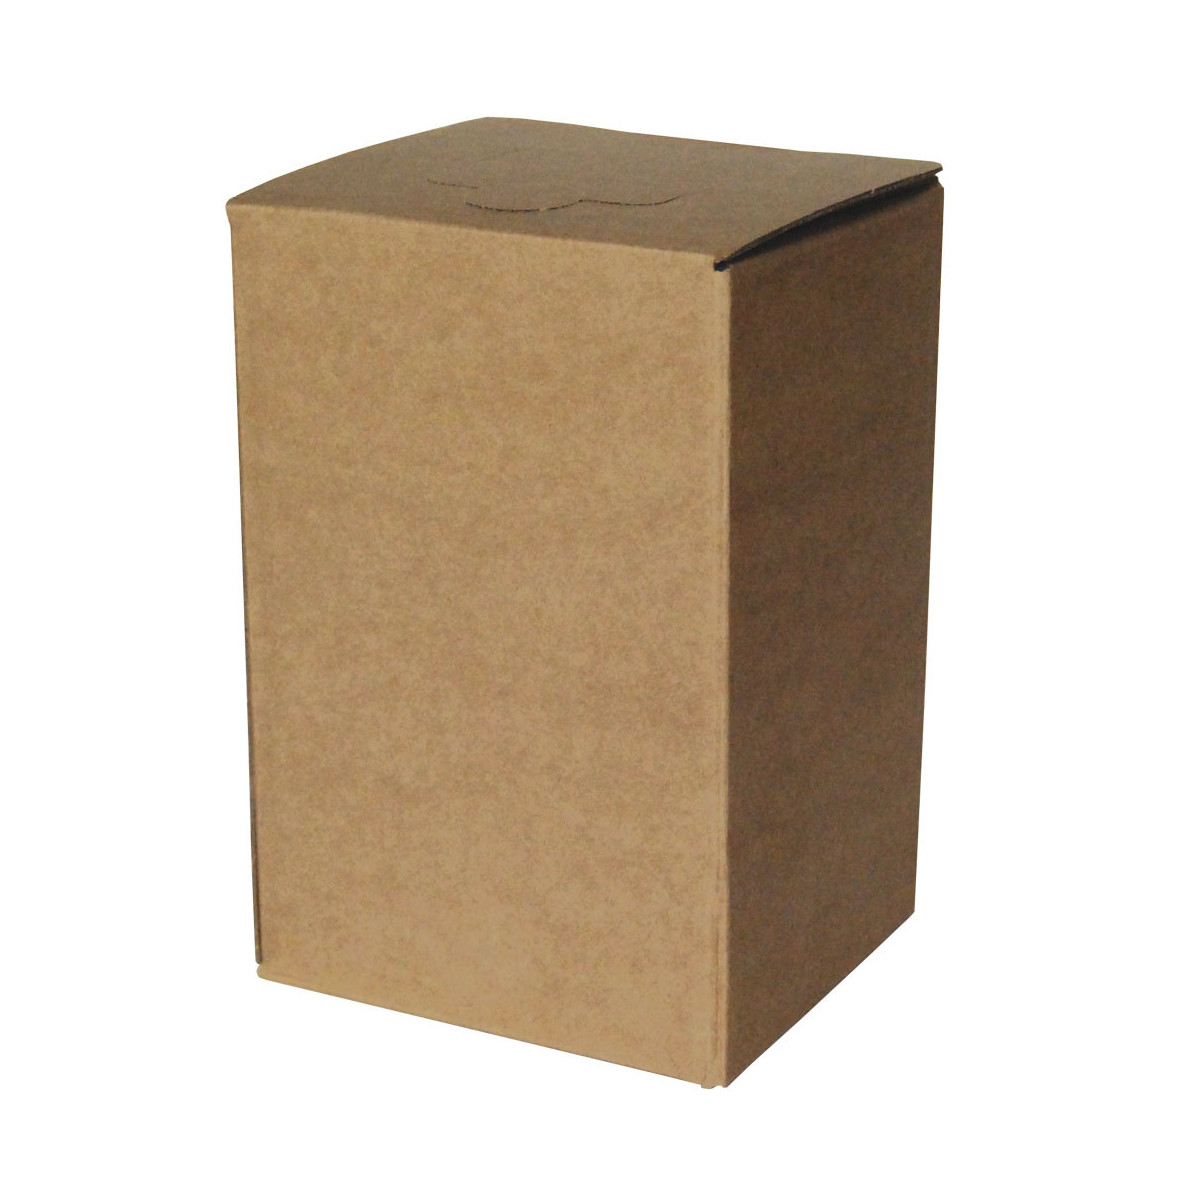 Box BROWN for bag in box 10 l